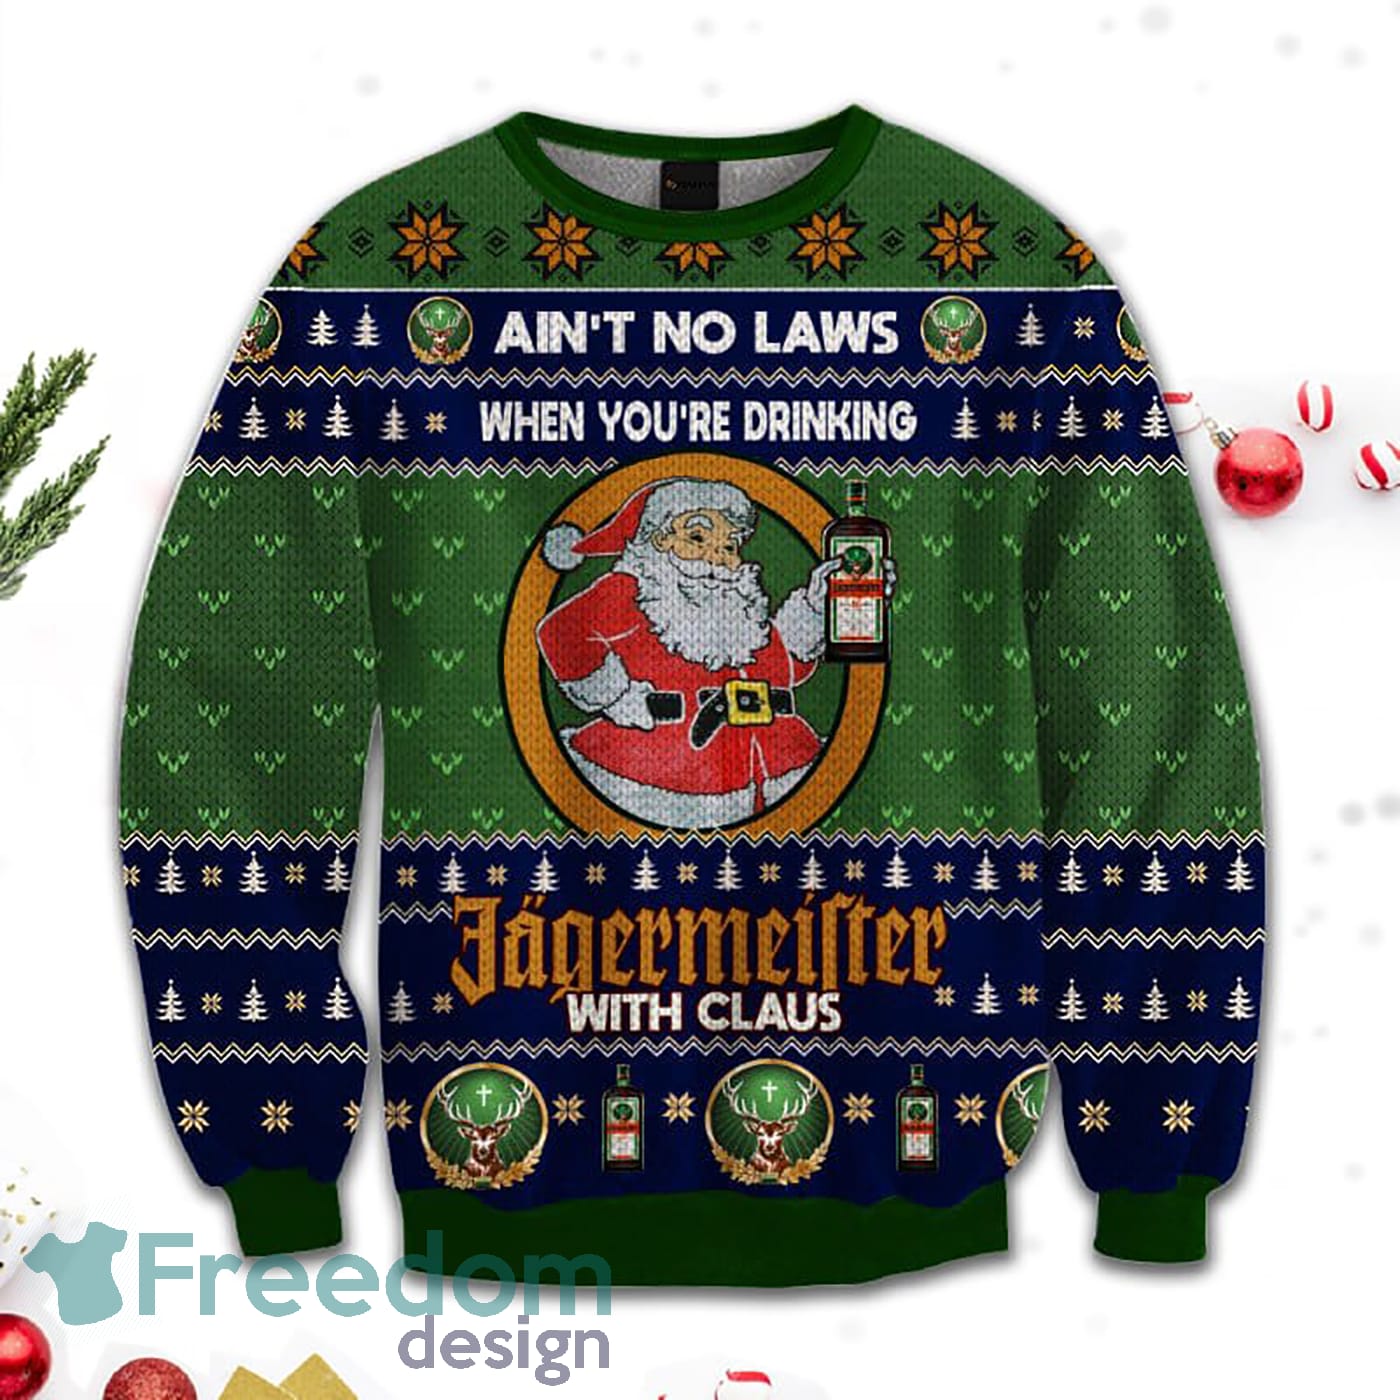 Merr Christmas Ain't No Laws When You Drink Malibu Rum With Claus Sweatshirt